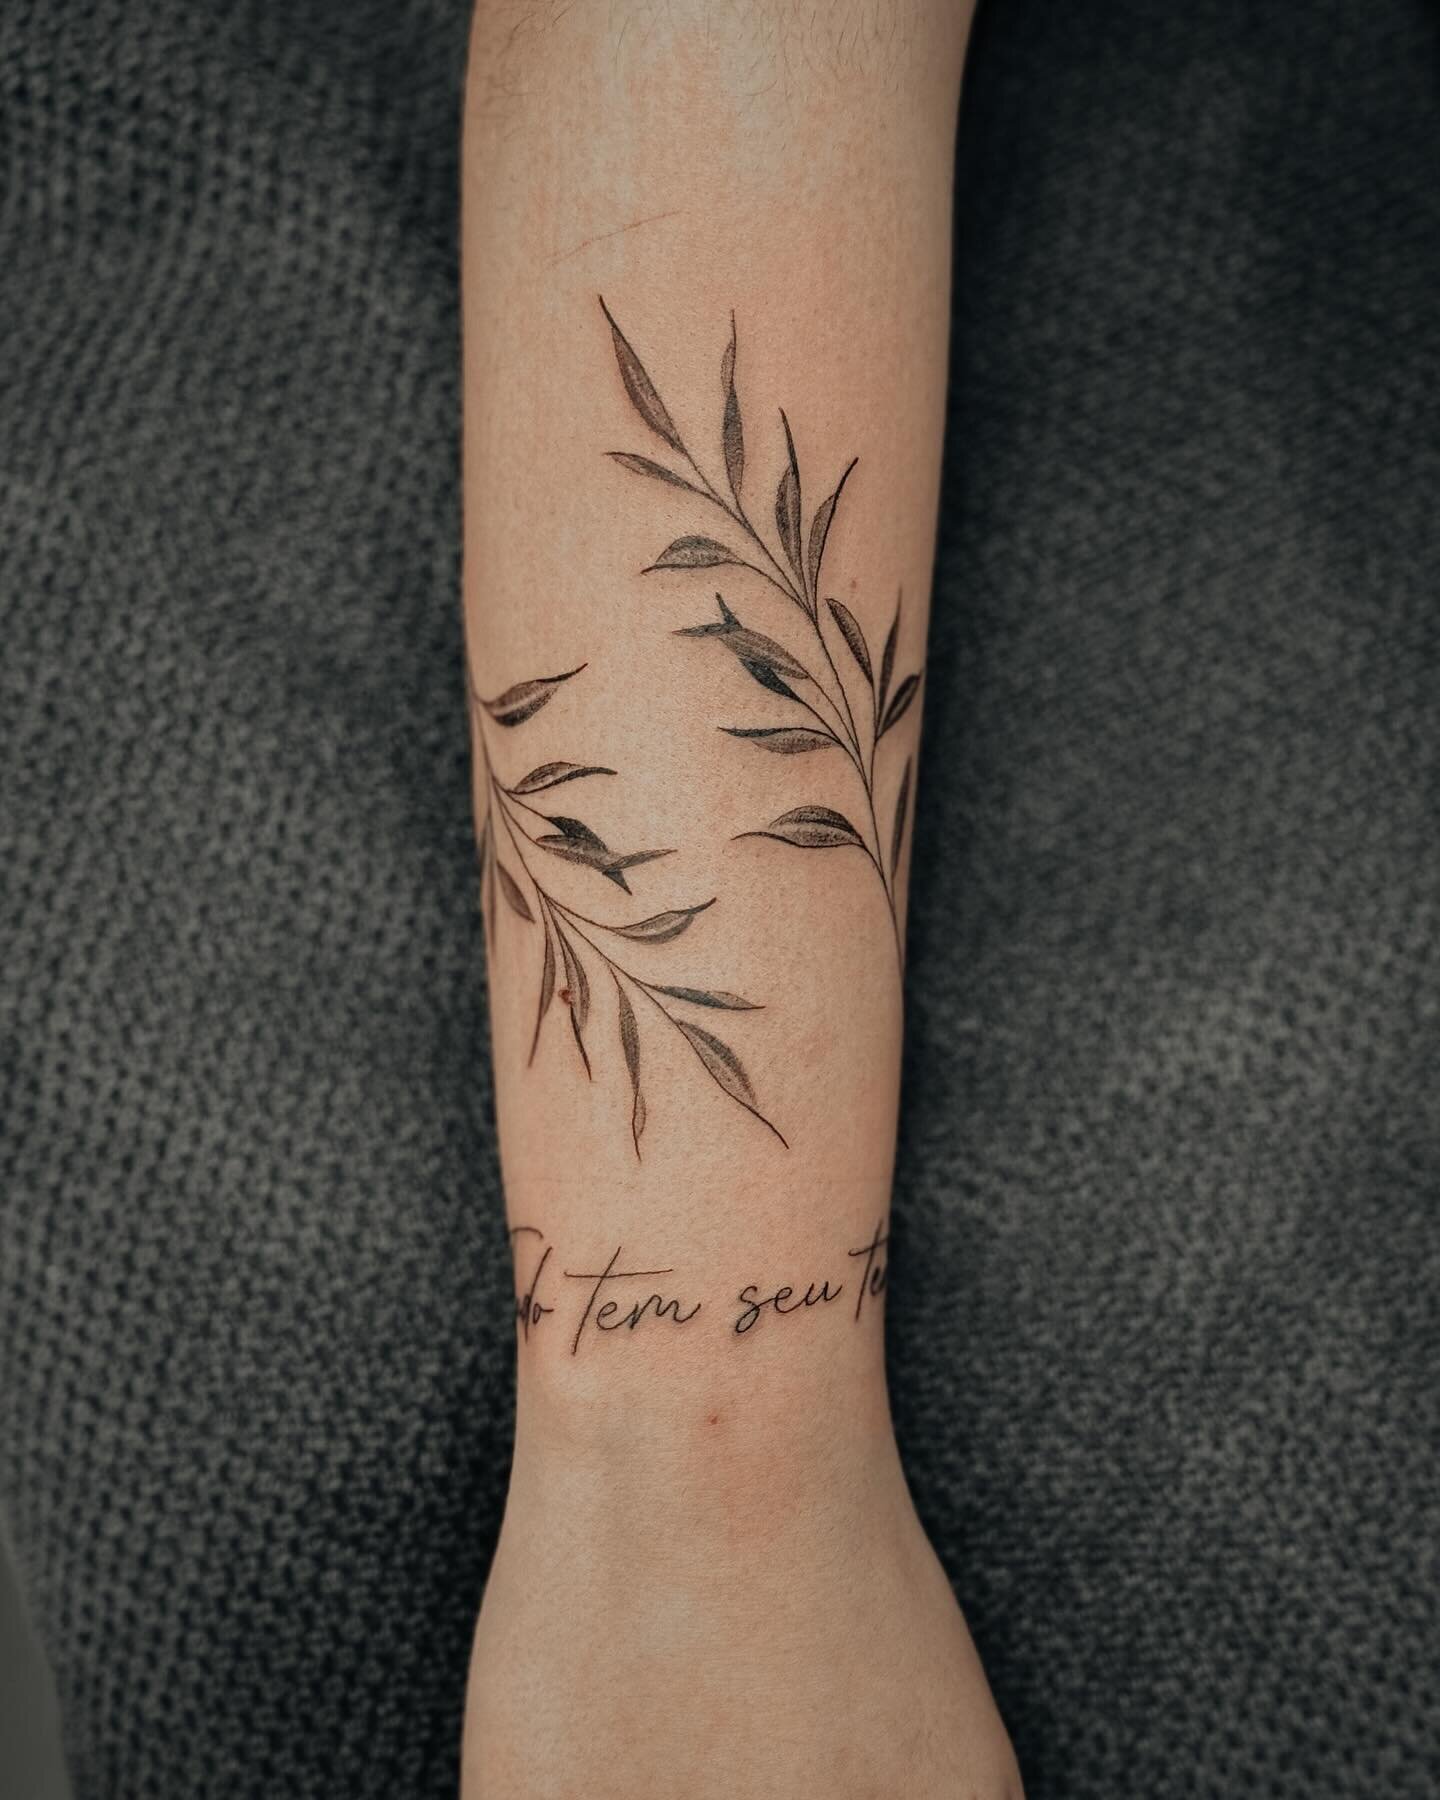 leaves 🍃 
.
.
.
#tattoo #tattoos #tattooideas #birsfelden #basel #studio #switzerland #tattooforwoman #armtattoo #leavestattoo #leaves🍃